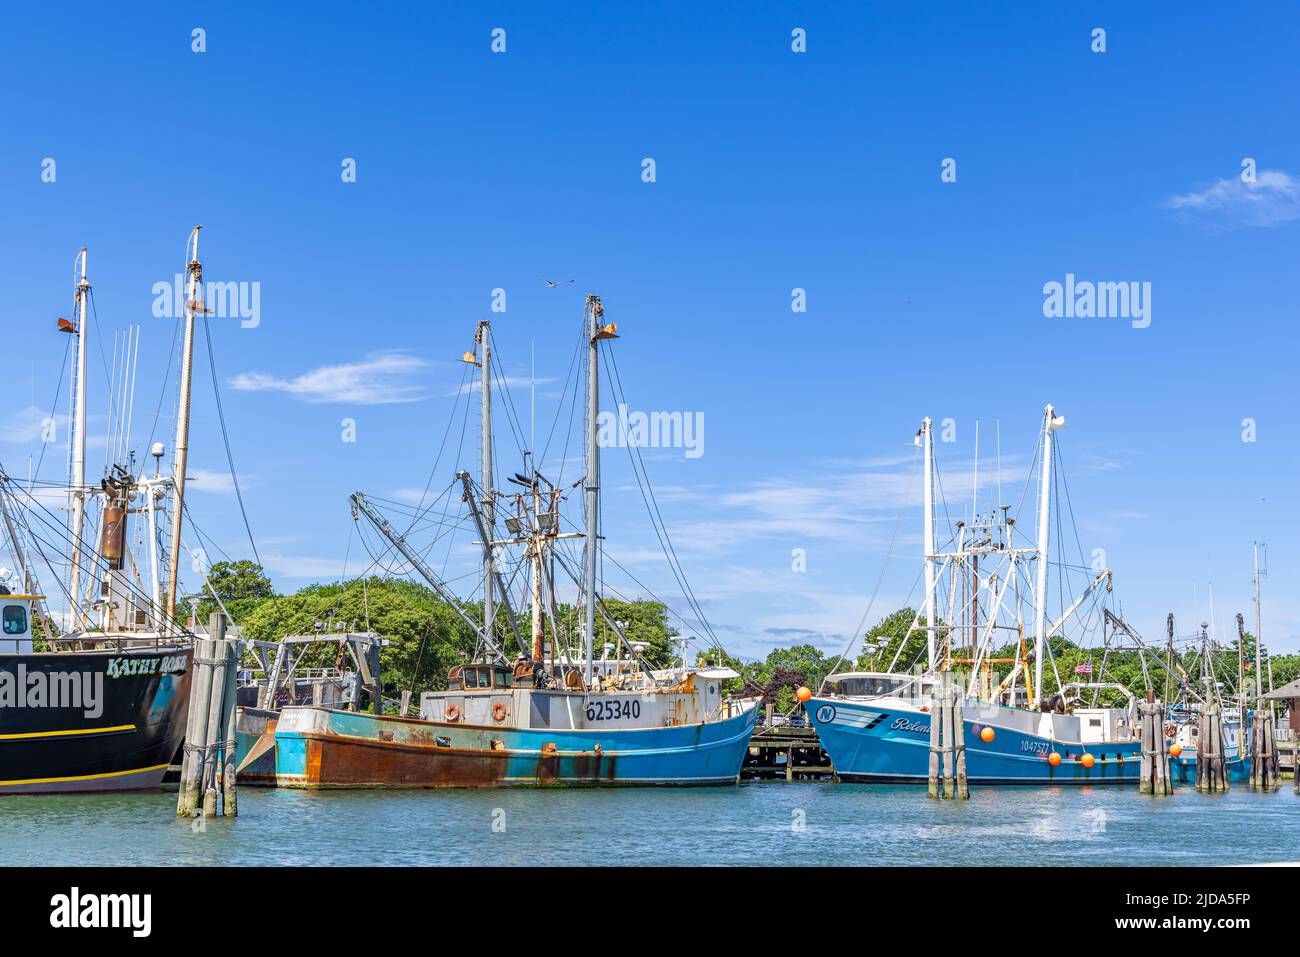 Three fishing vessels at the docks in Greenport, NY Stock Photo